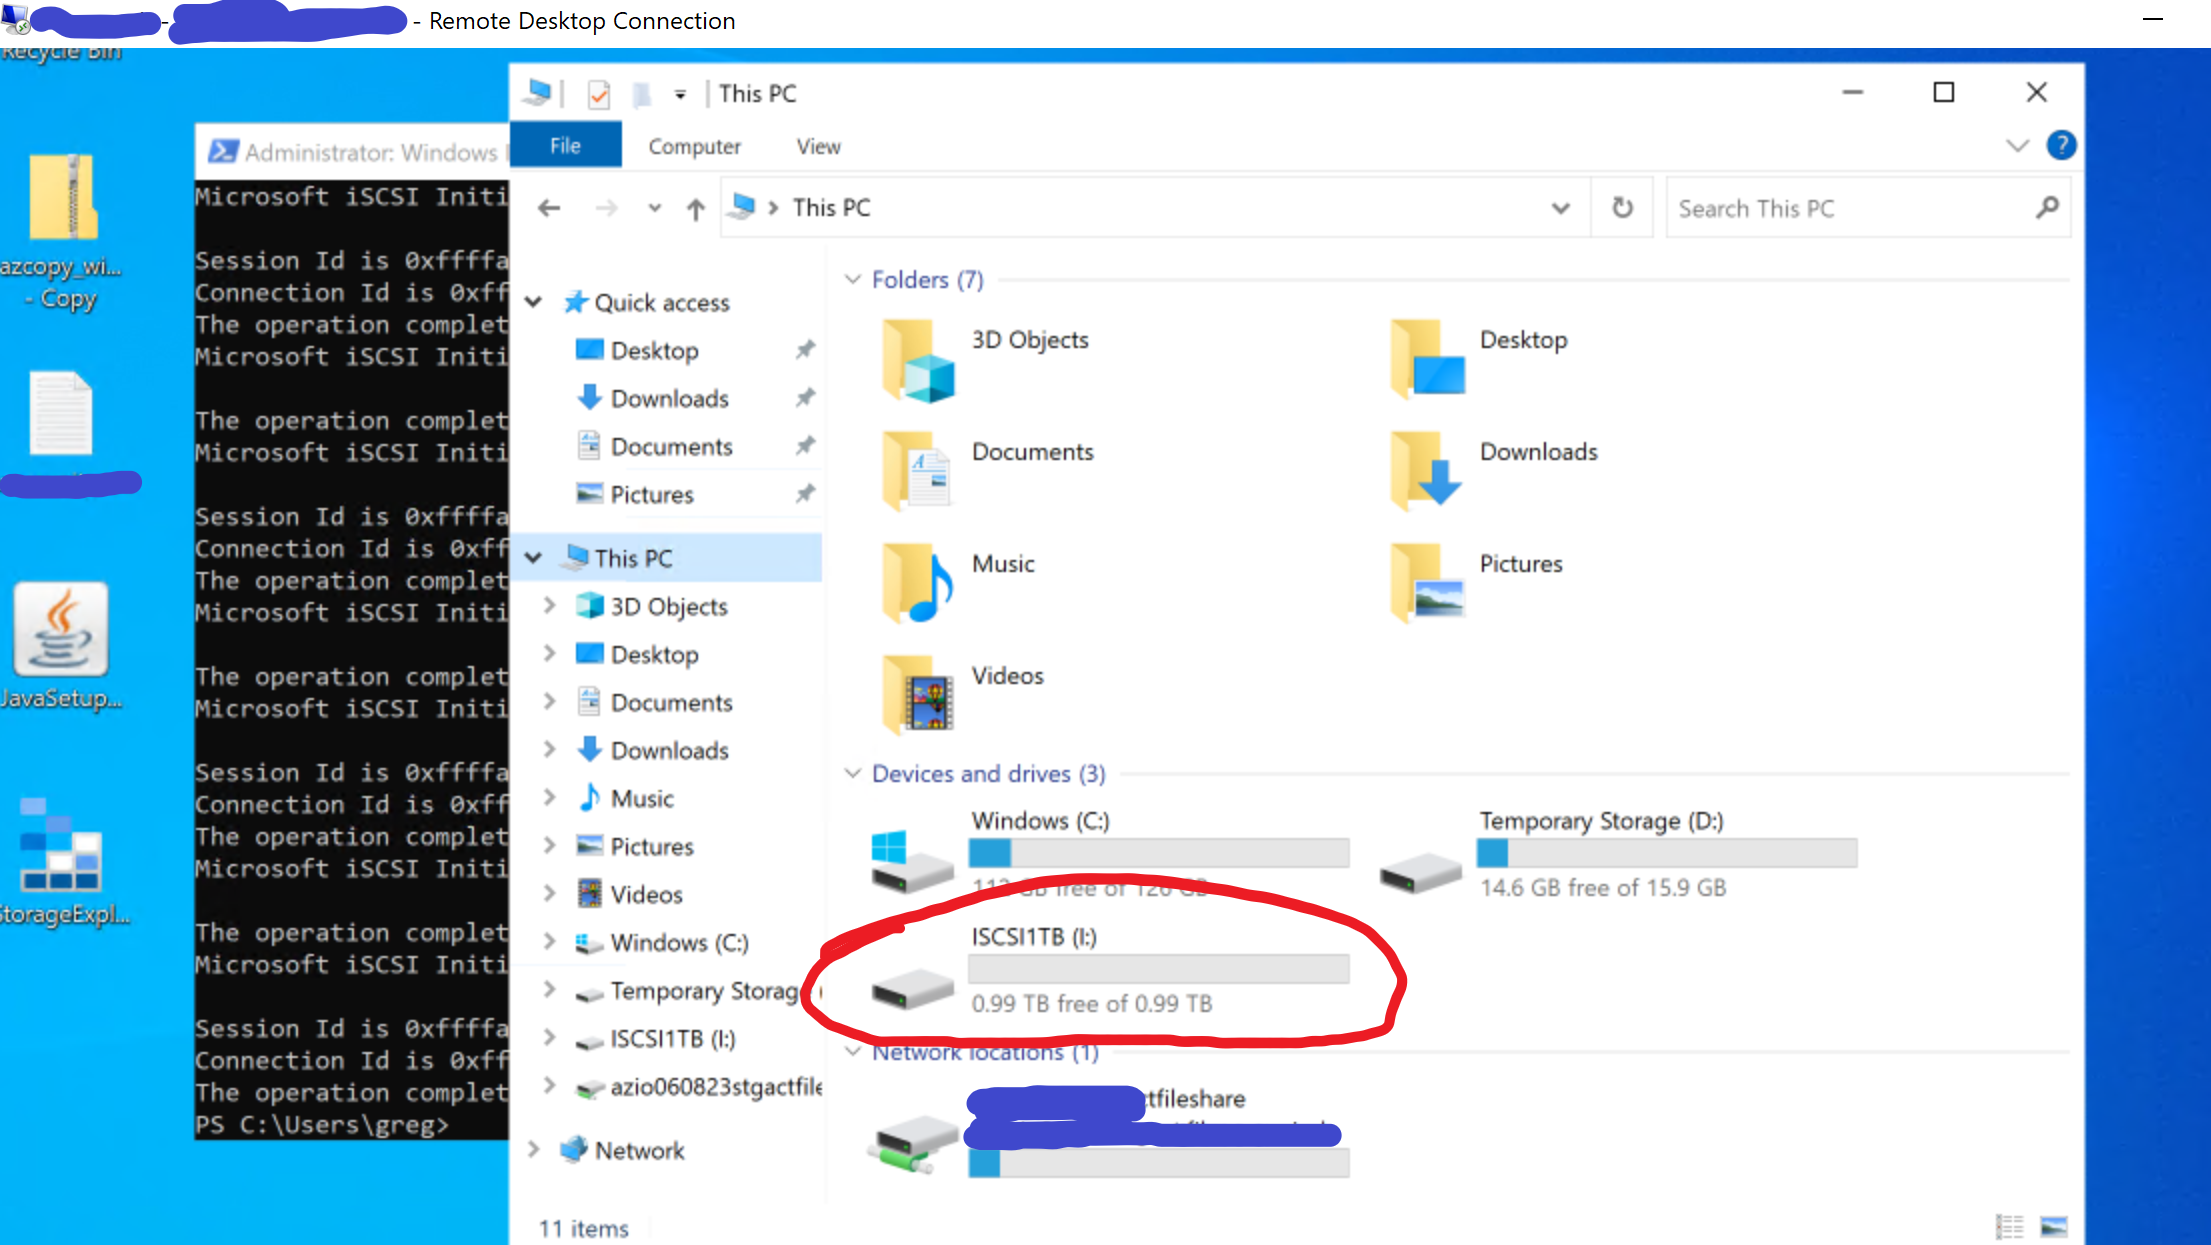 Microsoft Azure Elastic SAN from cloud to on-prem server storageioblog